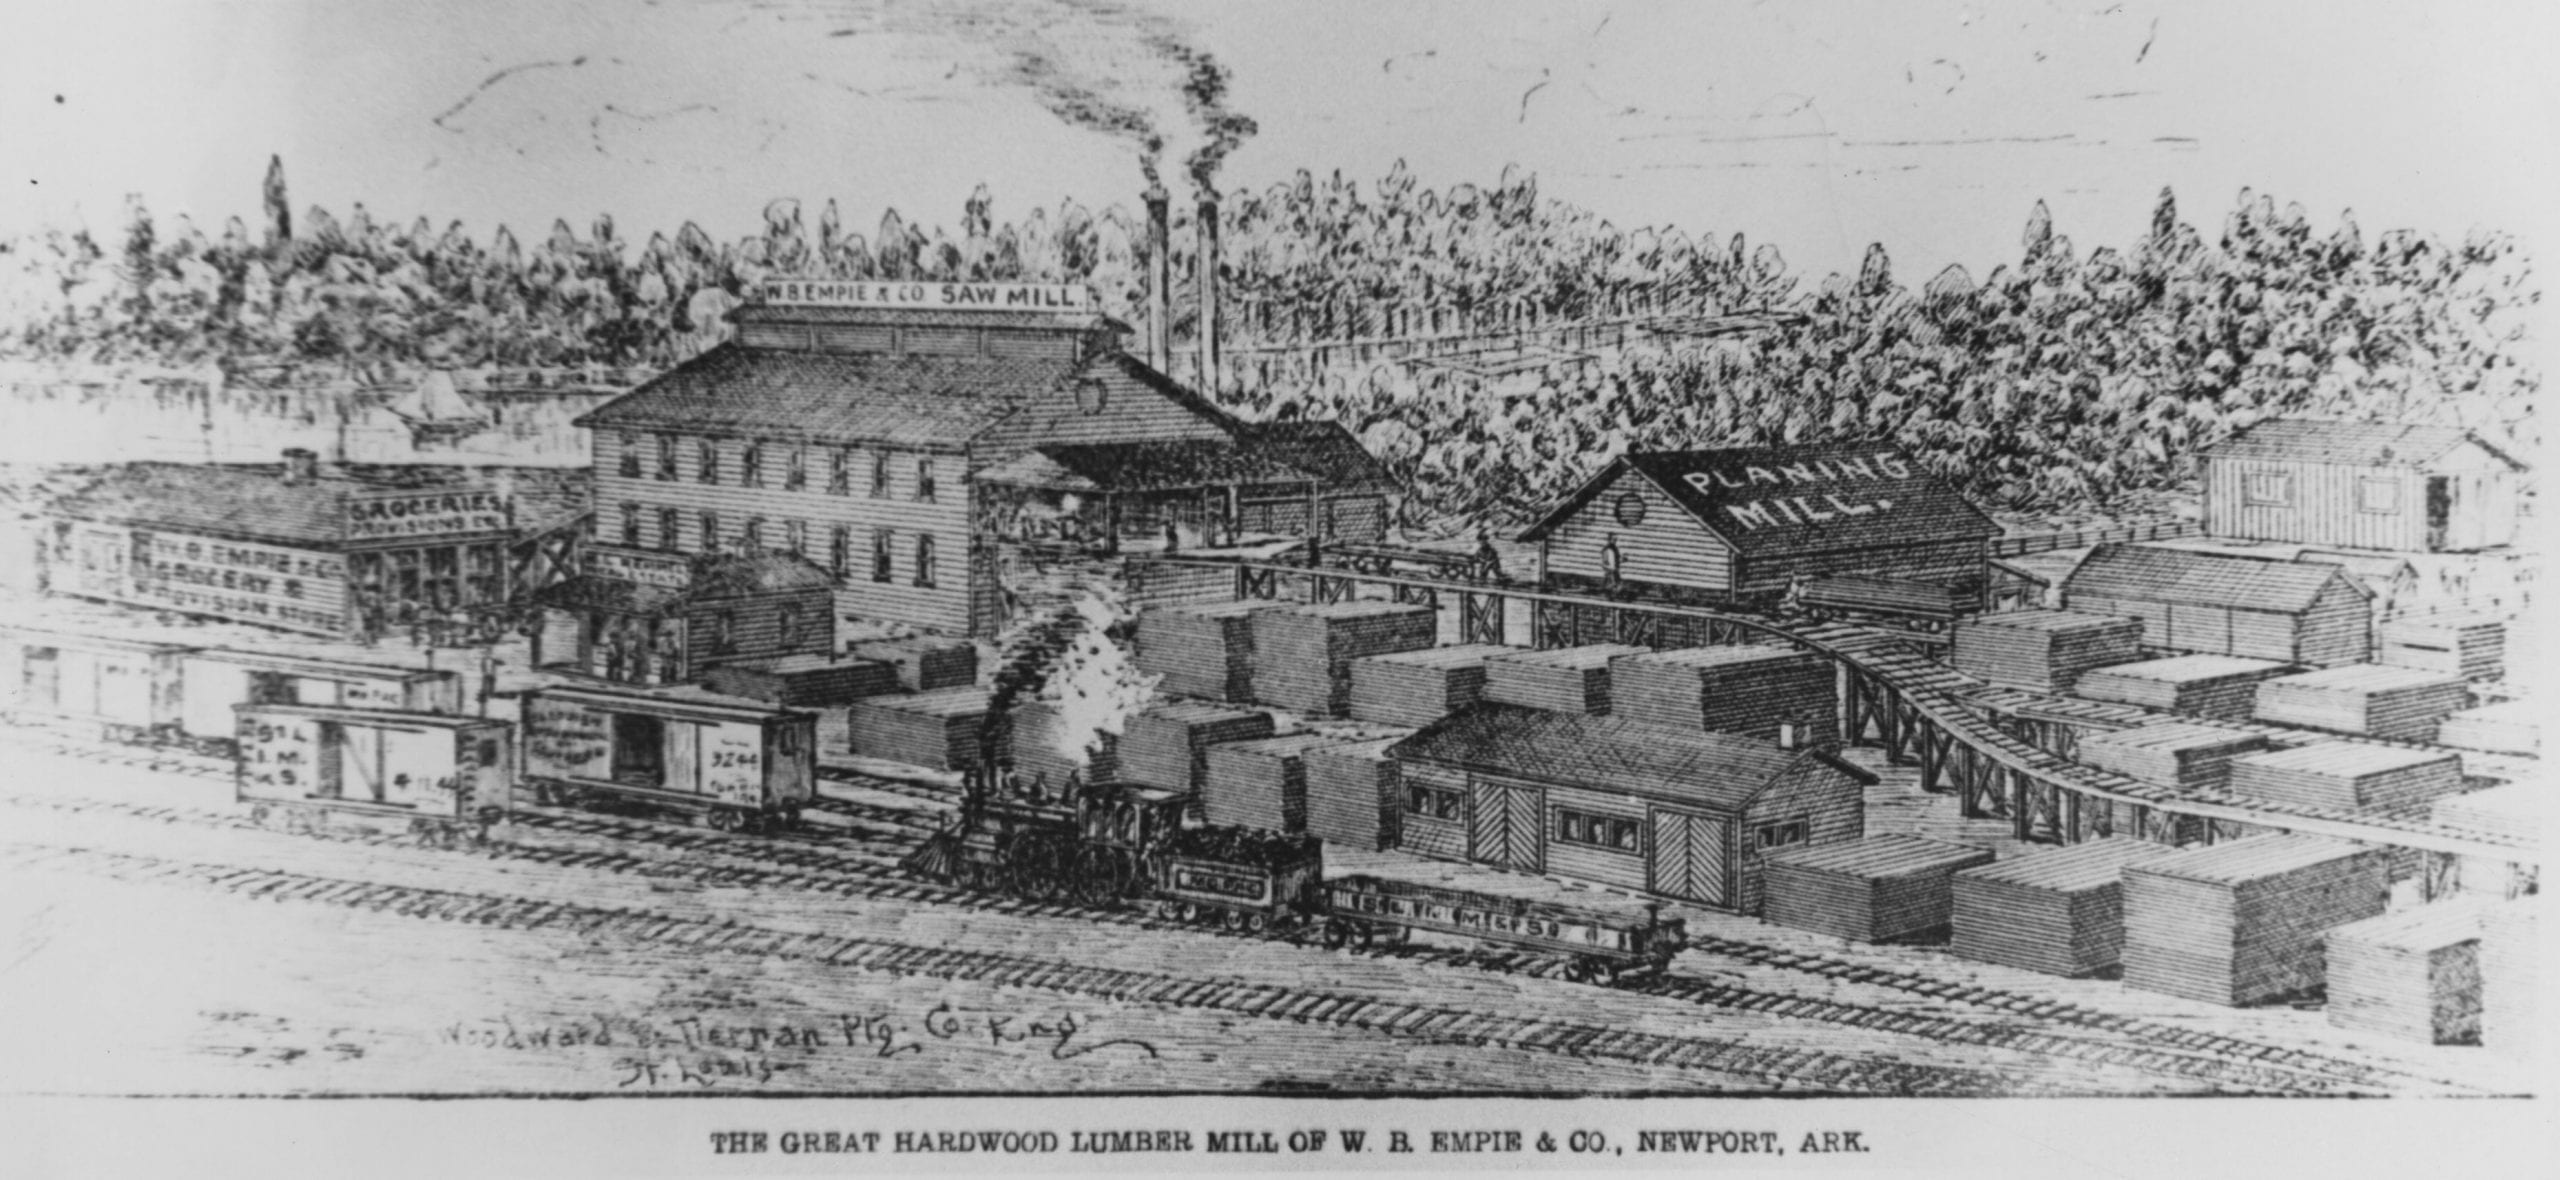 1880’s – W.B. Empie Lumber Mill